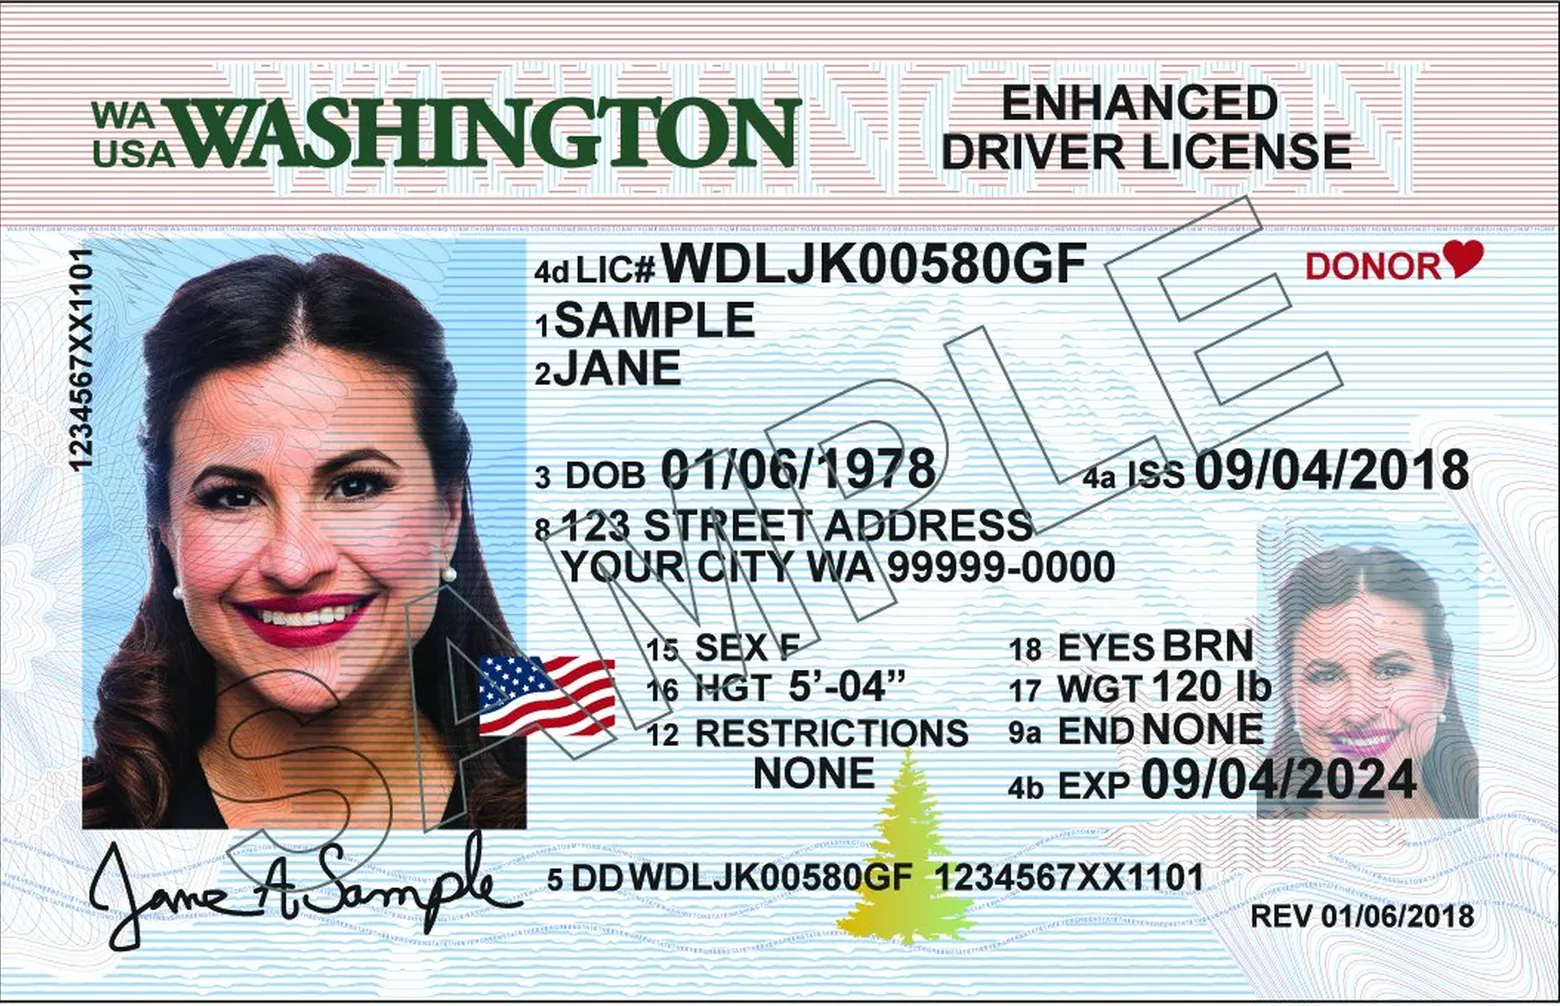 arkansas driver's license renewal enhanced